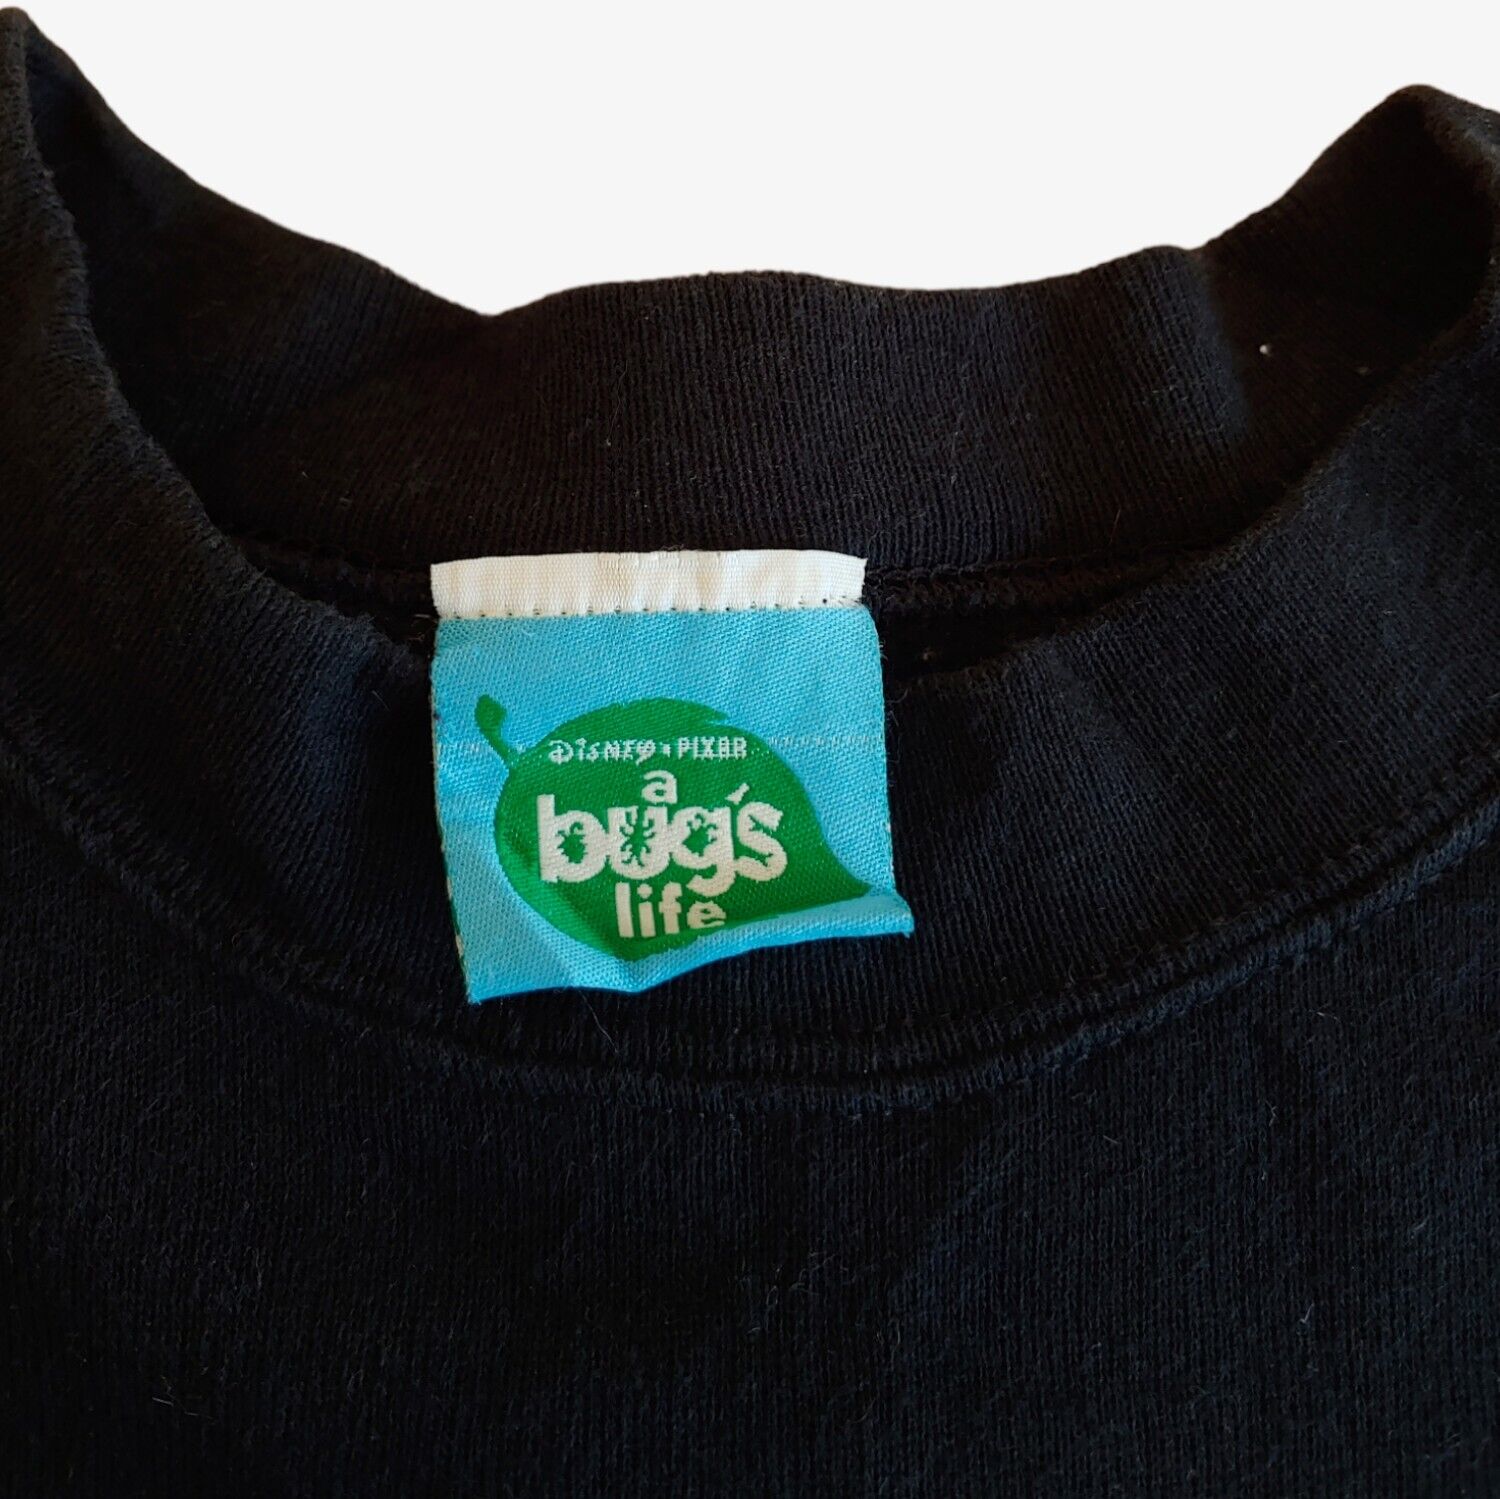 Vintage 90s Disney Pixar 1998 A Bugs Life Promotional Crewneck Sweatshirt Label - Casspios Dream